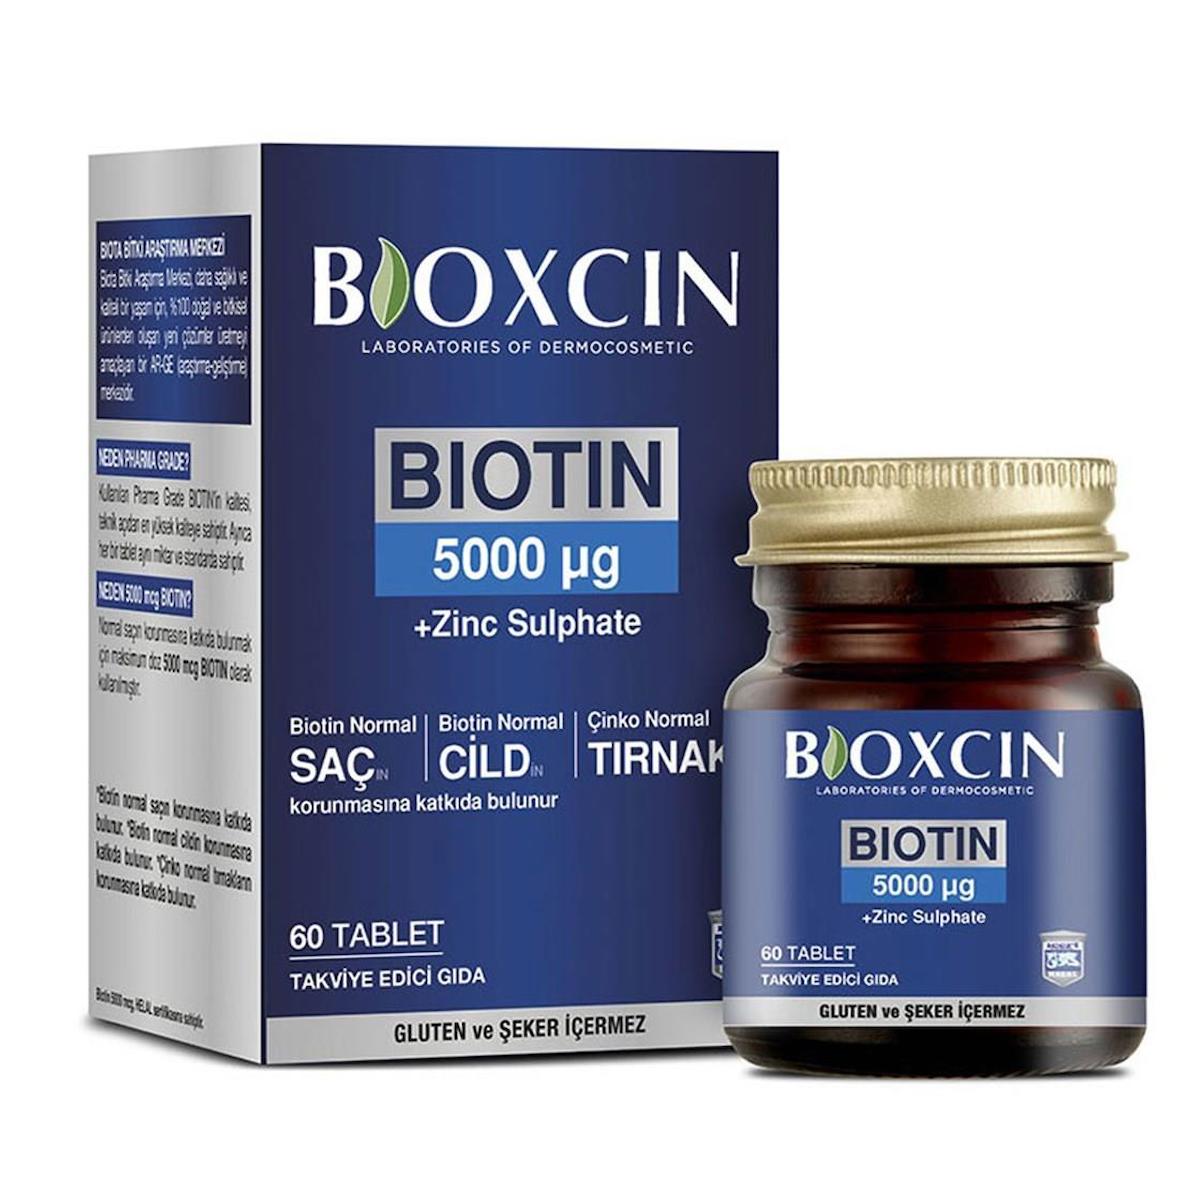 Bıoxcın Biotin Sade Unisex Vitamin 60 Tablet